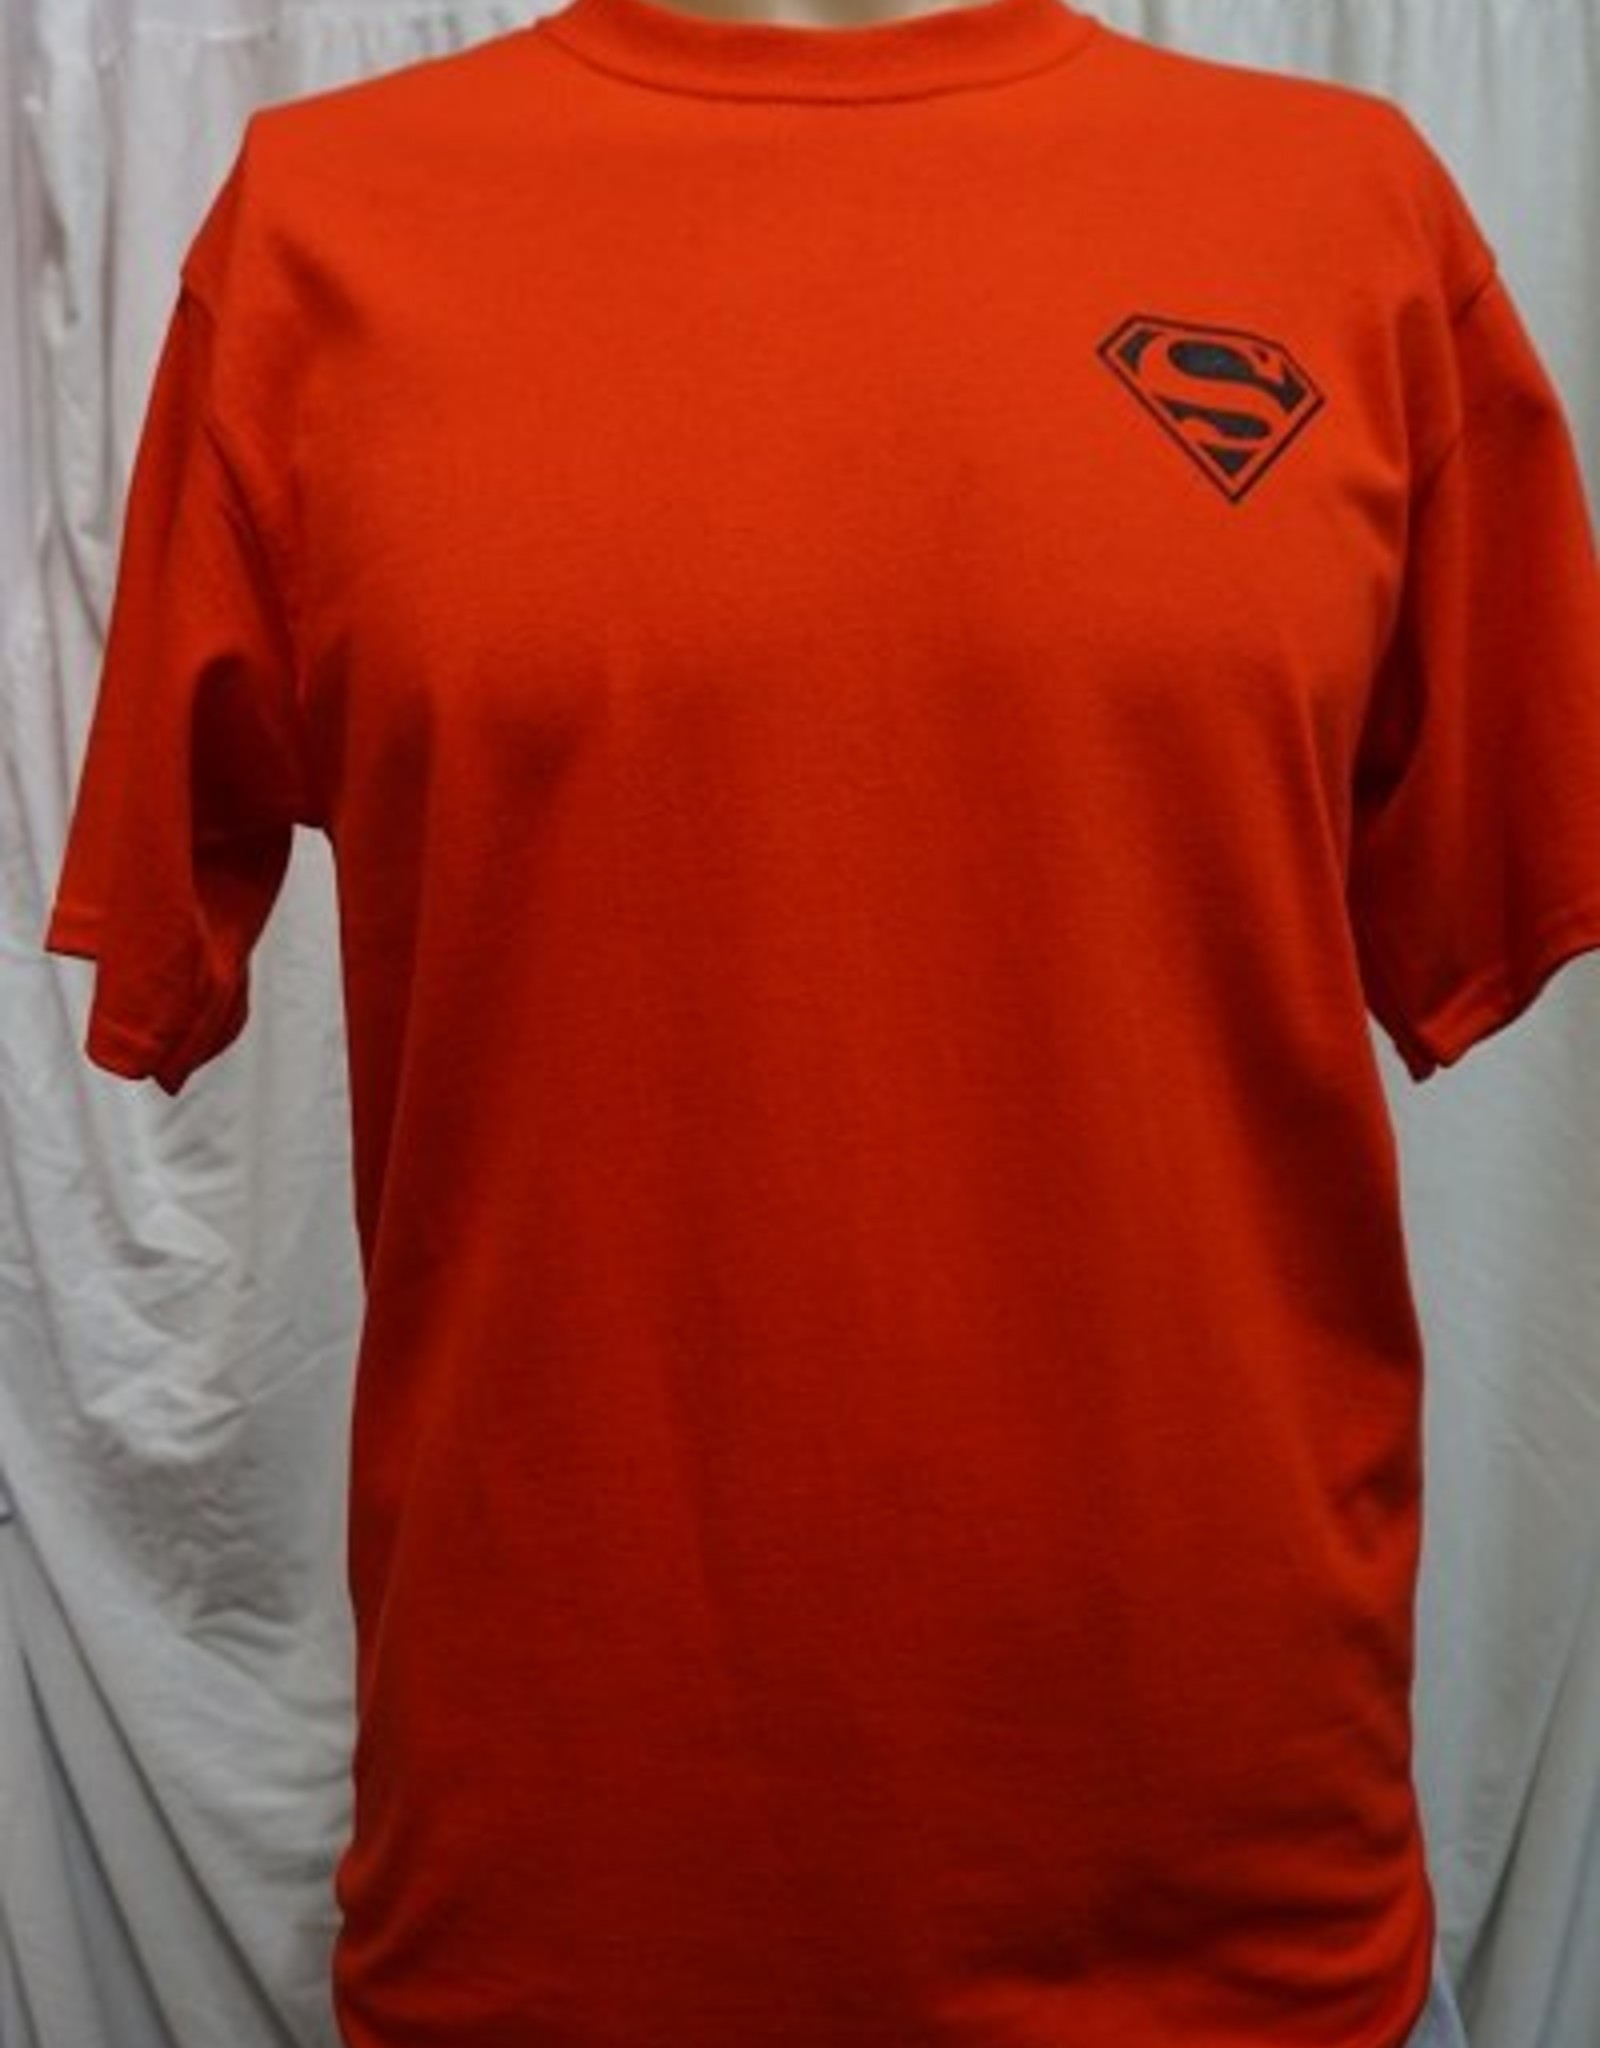 Stack's Gym Superman / Dumbbell Logo